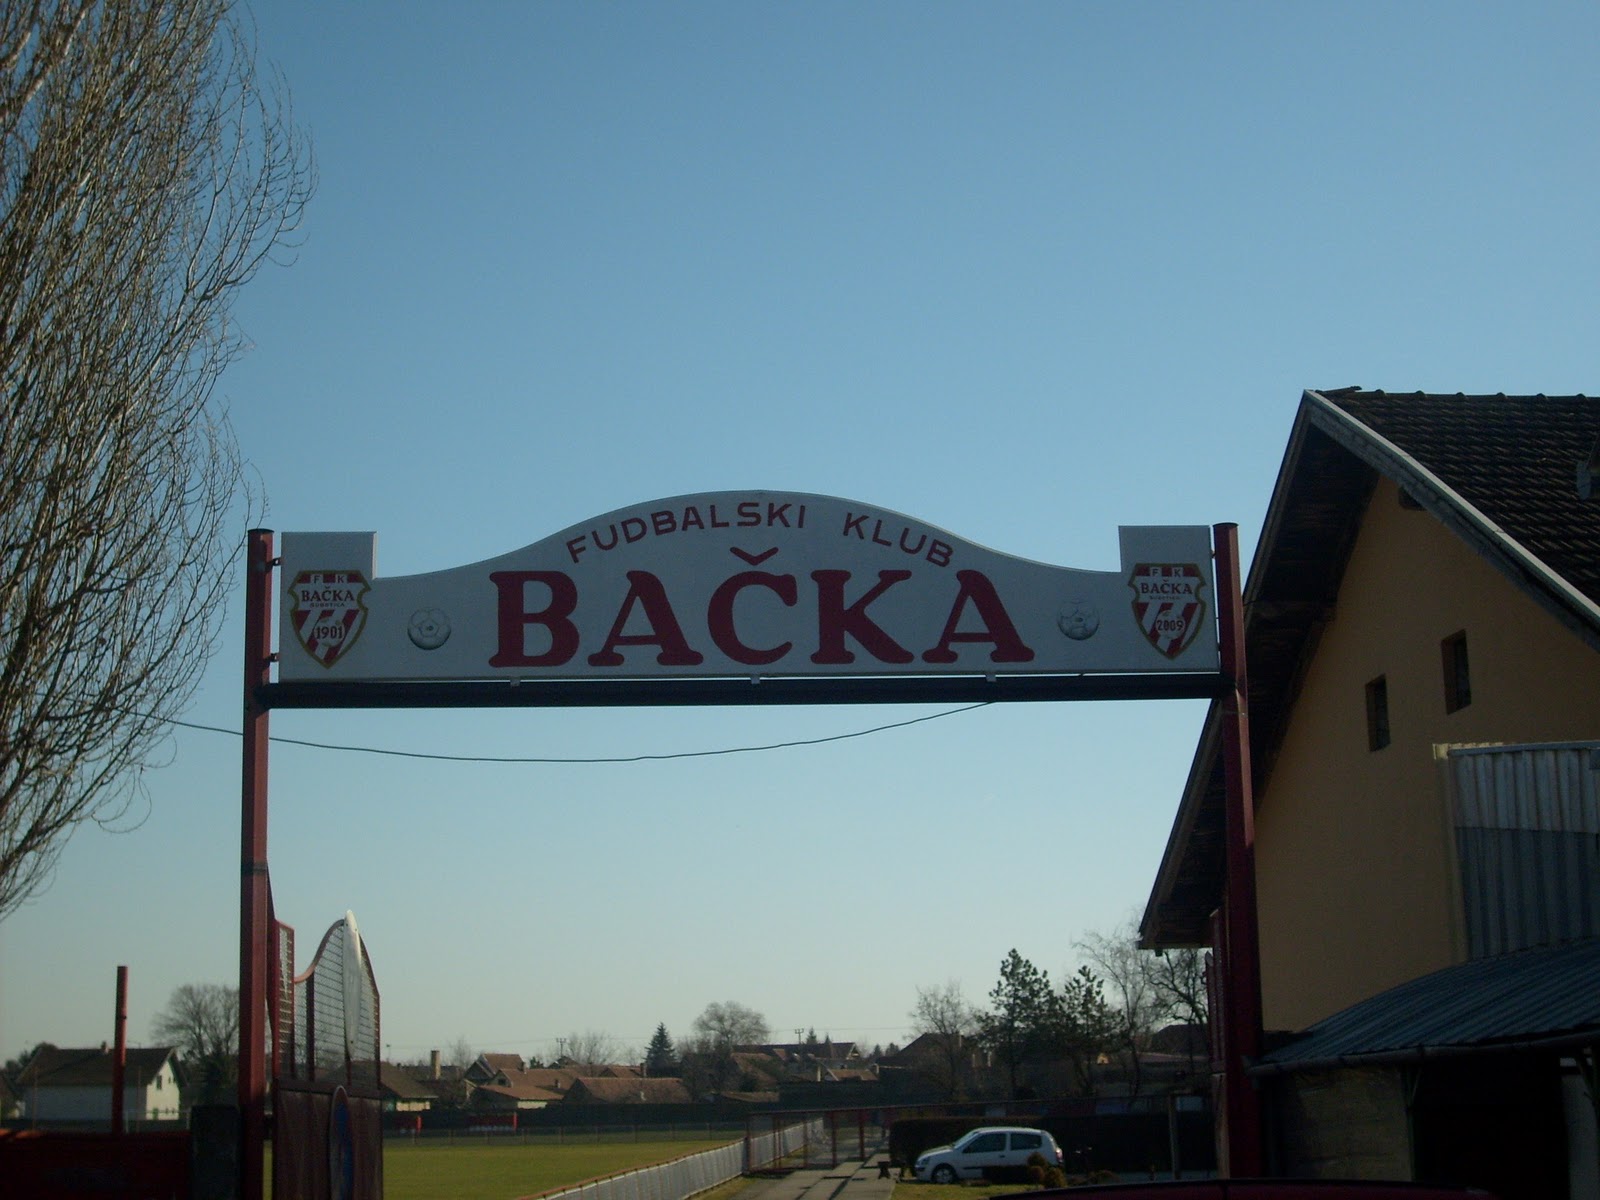 FK Backa